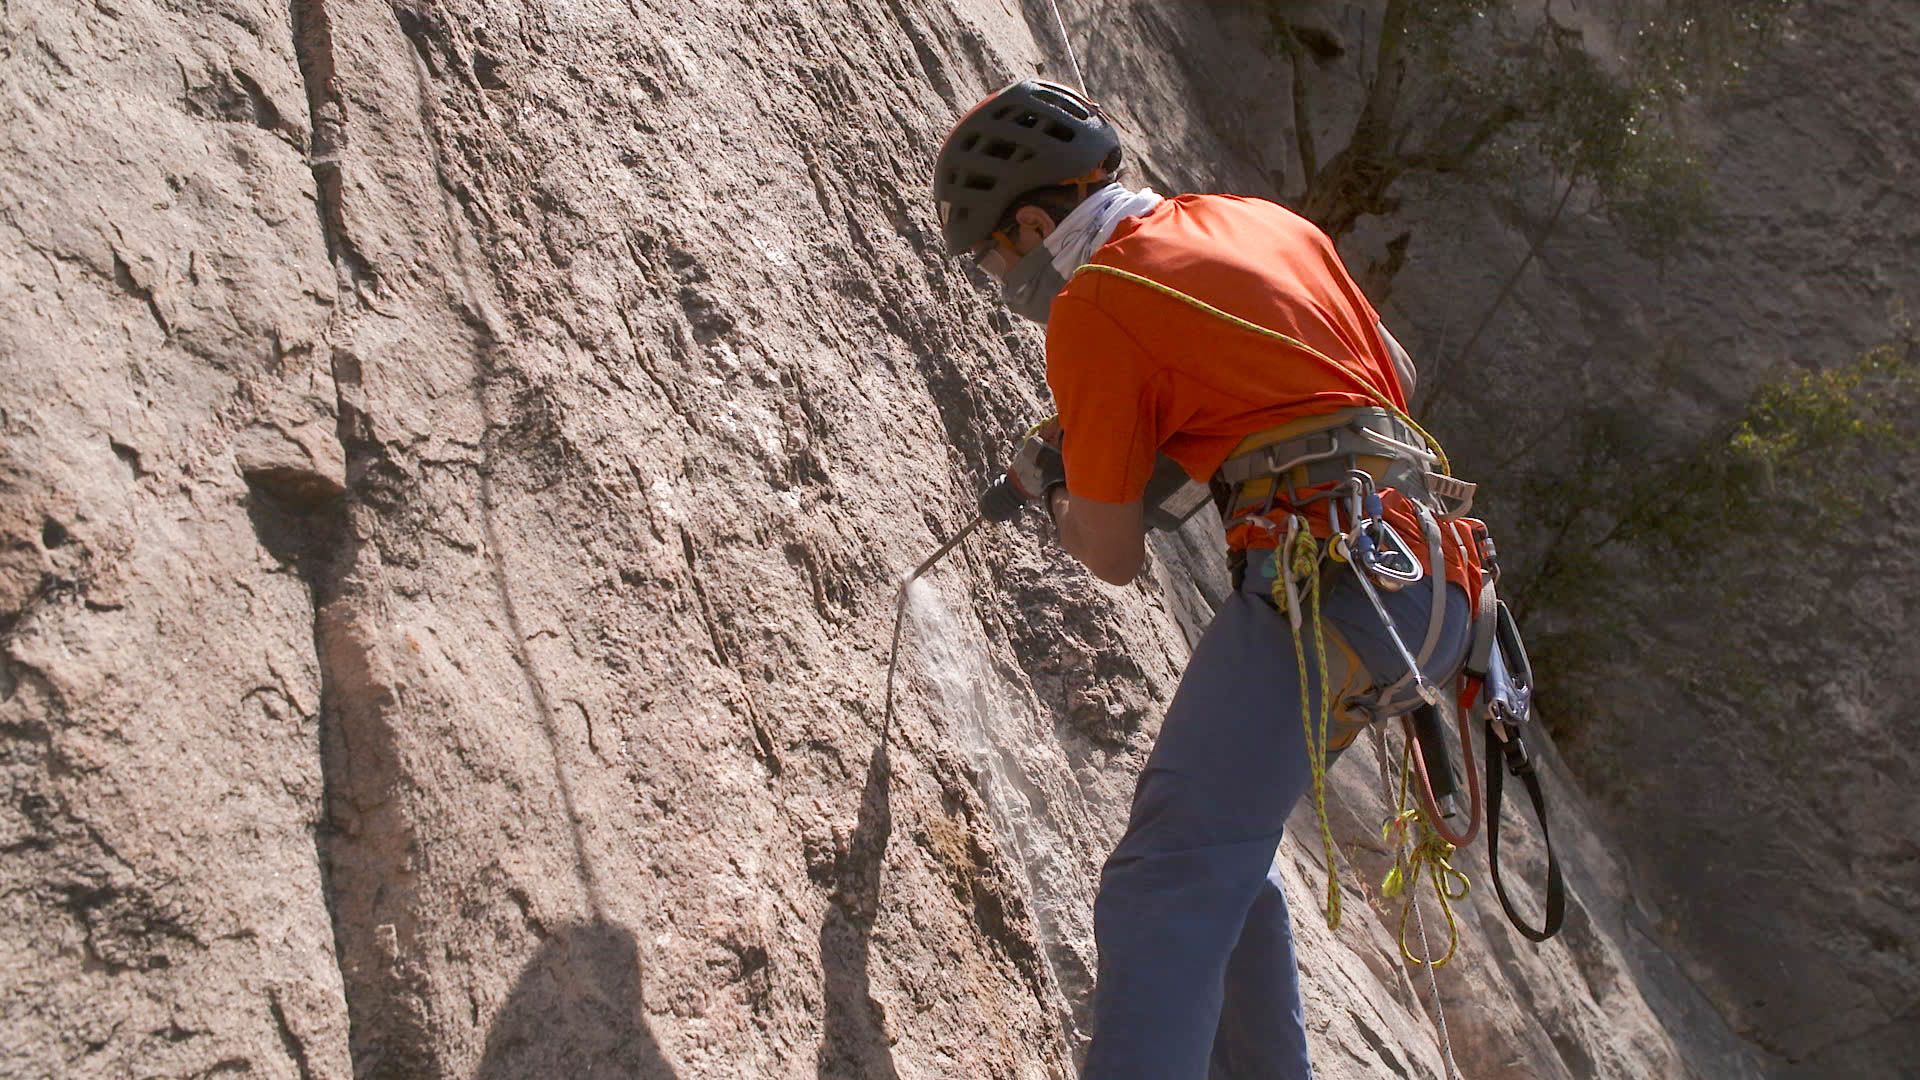 Saudi Arabia: Rock climbing takes off in unexpected destination